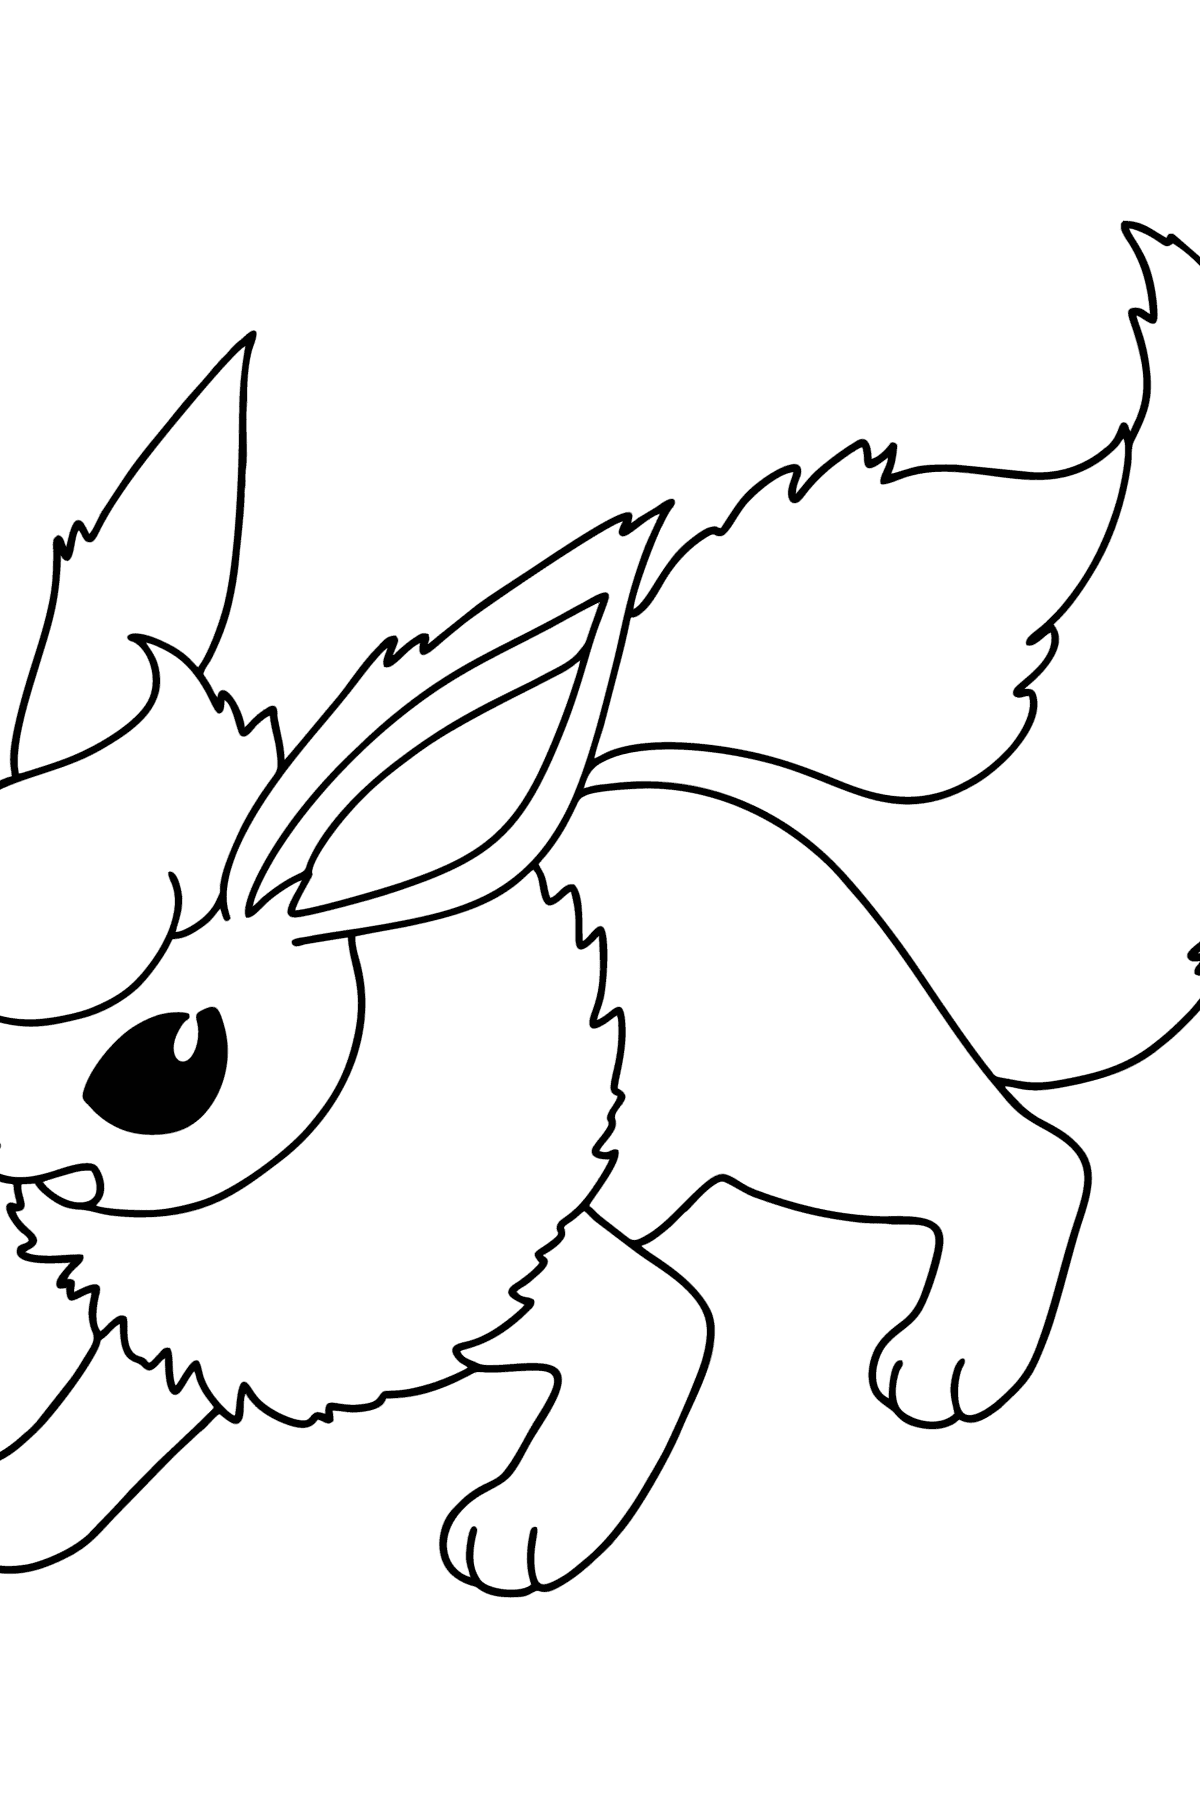 Раскраска Pokemon Go Flareon - Картинки для Детей